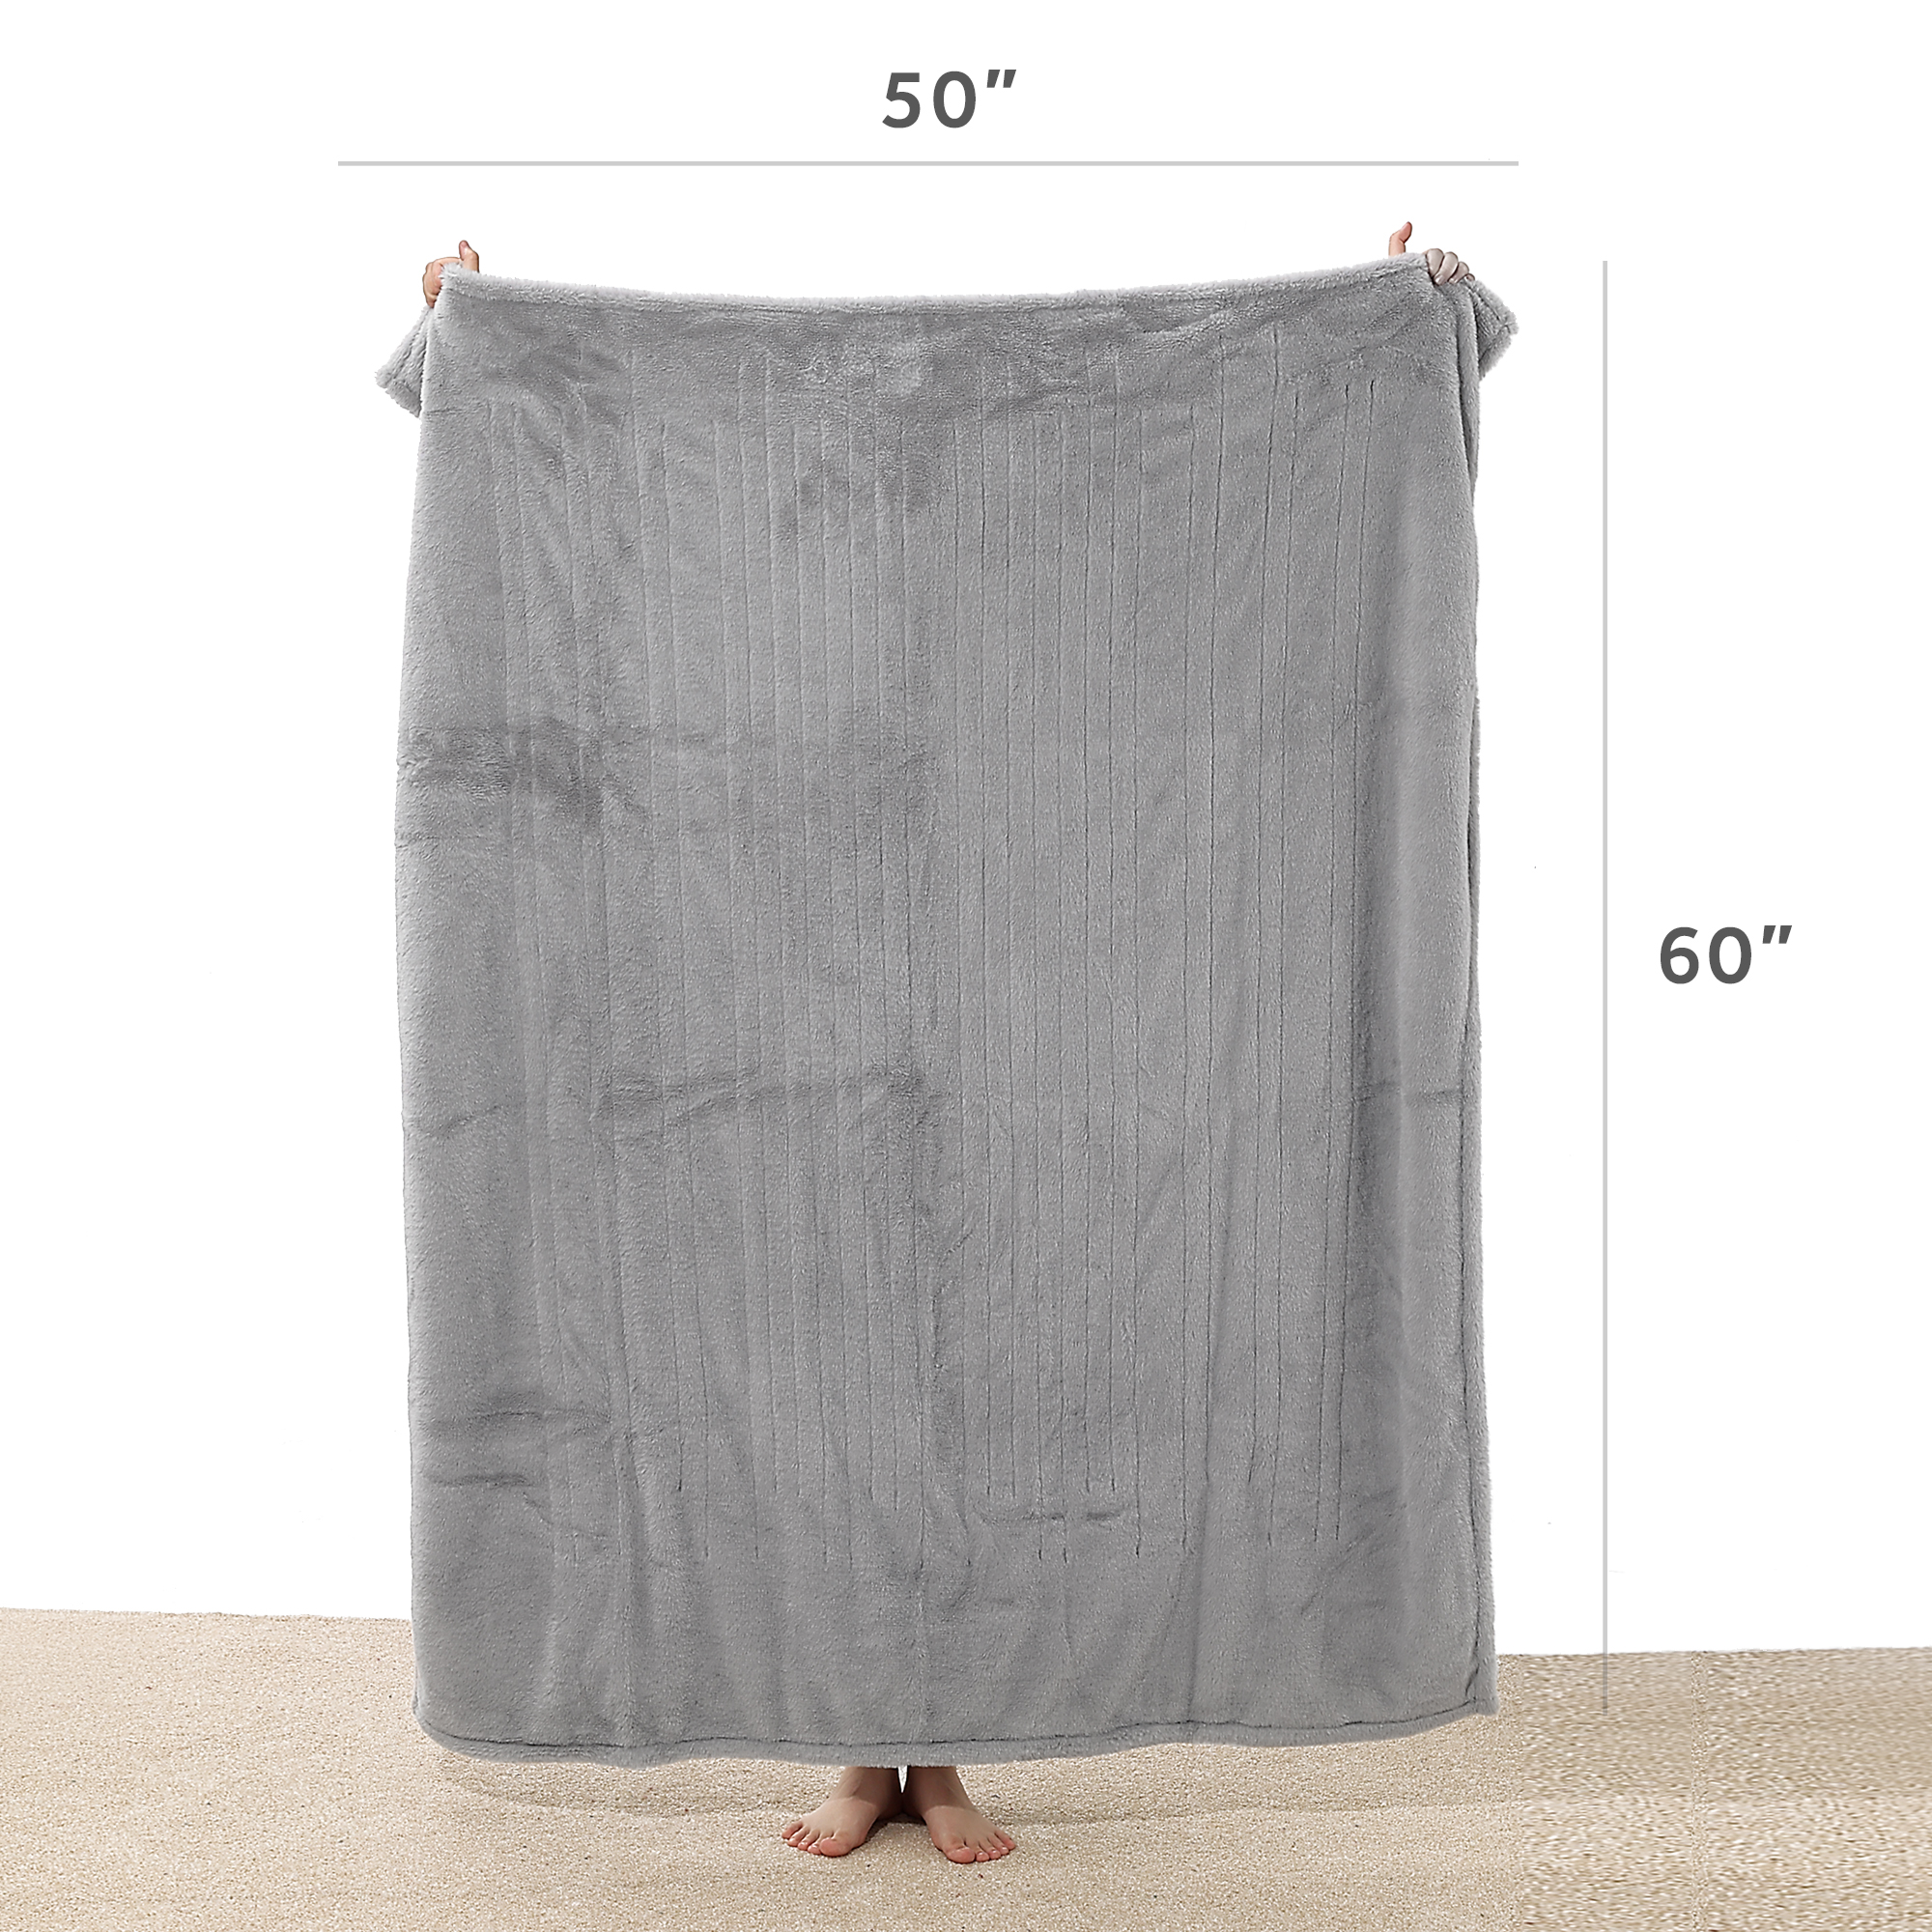 Sunbeam Grey Faux Fur Heated Electric Throw Blanket - image 4 of 8